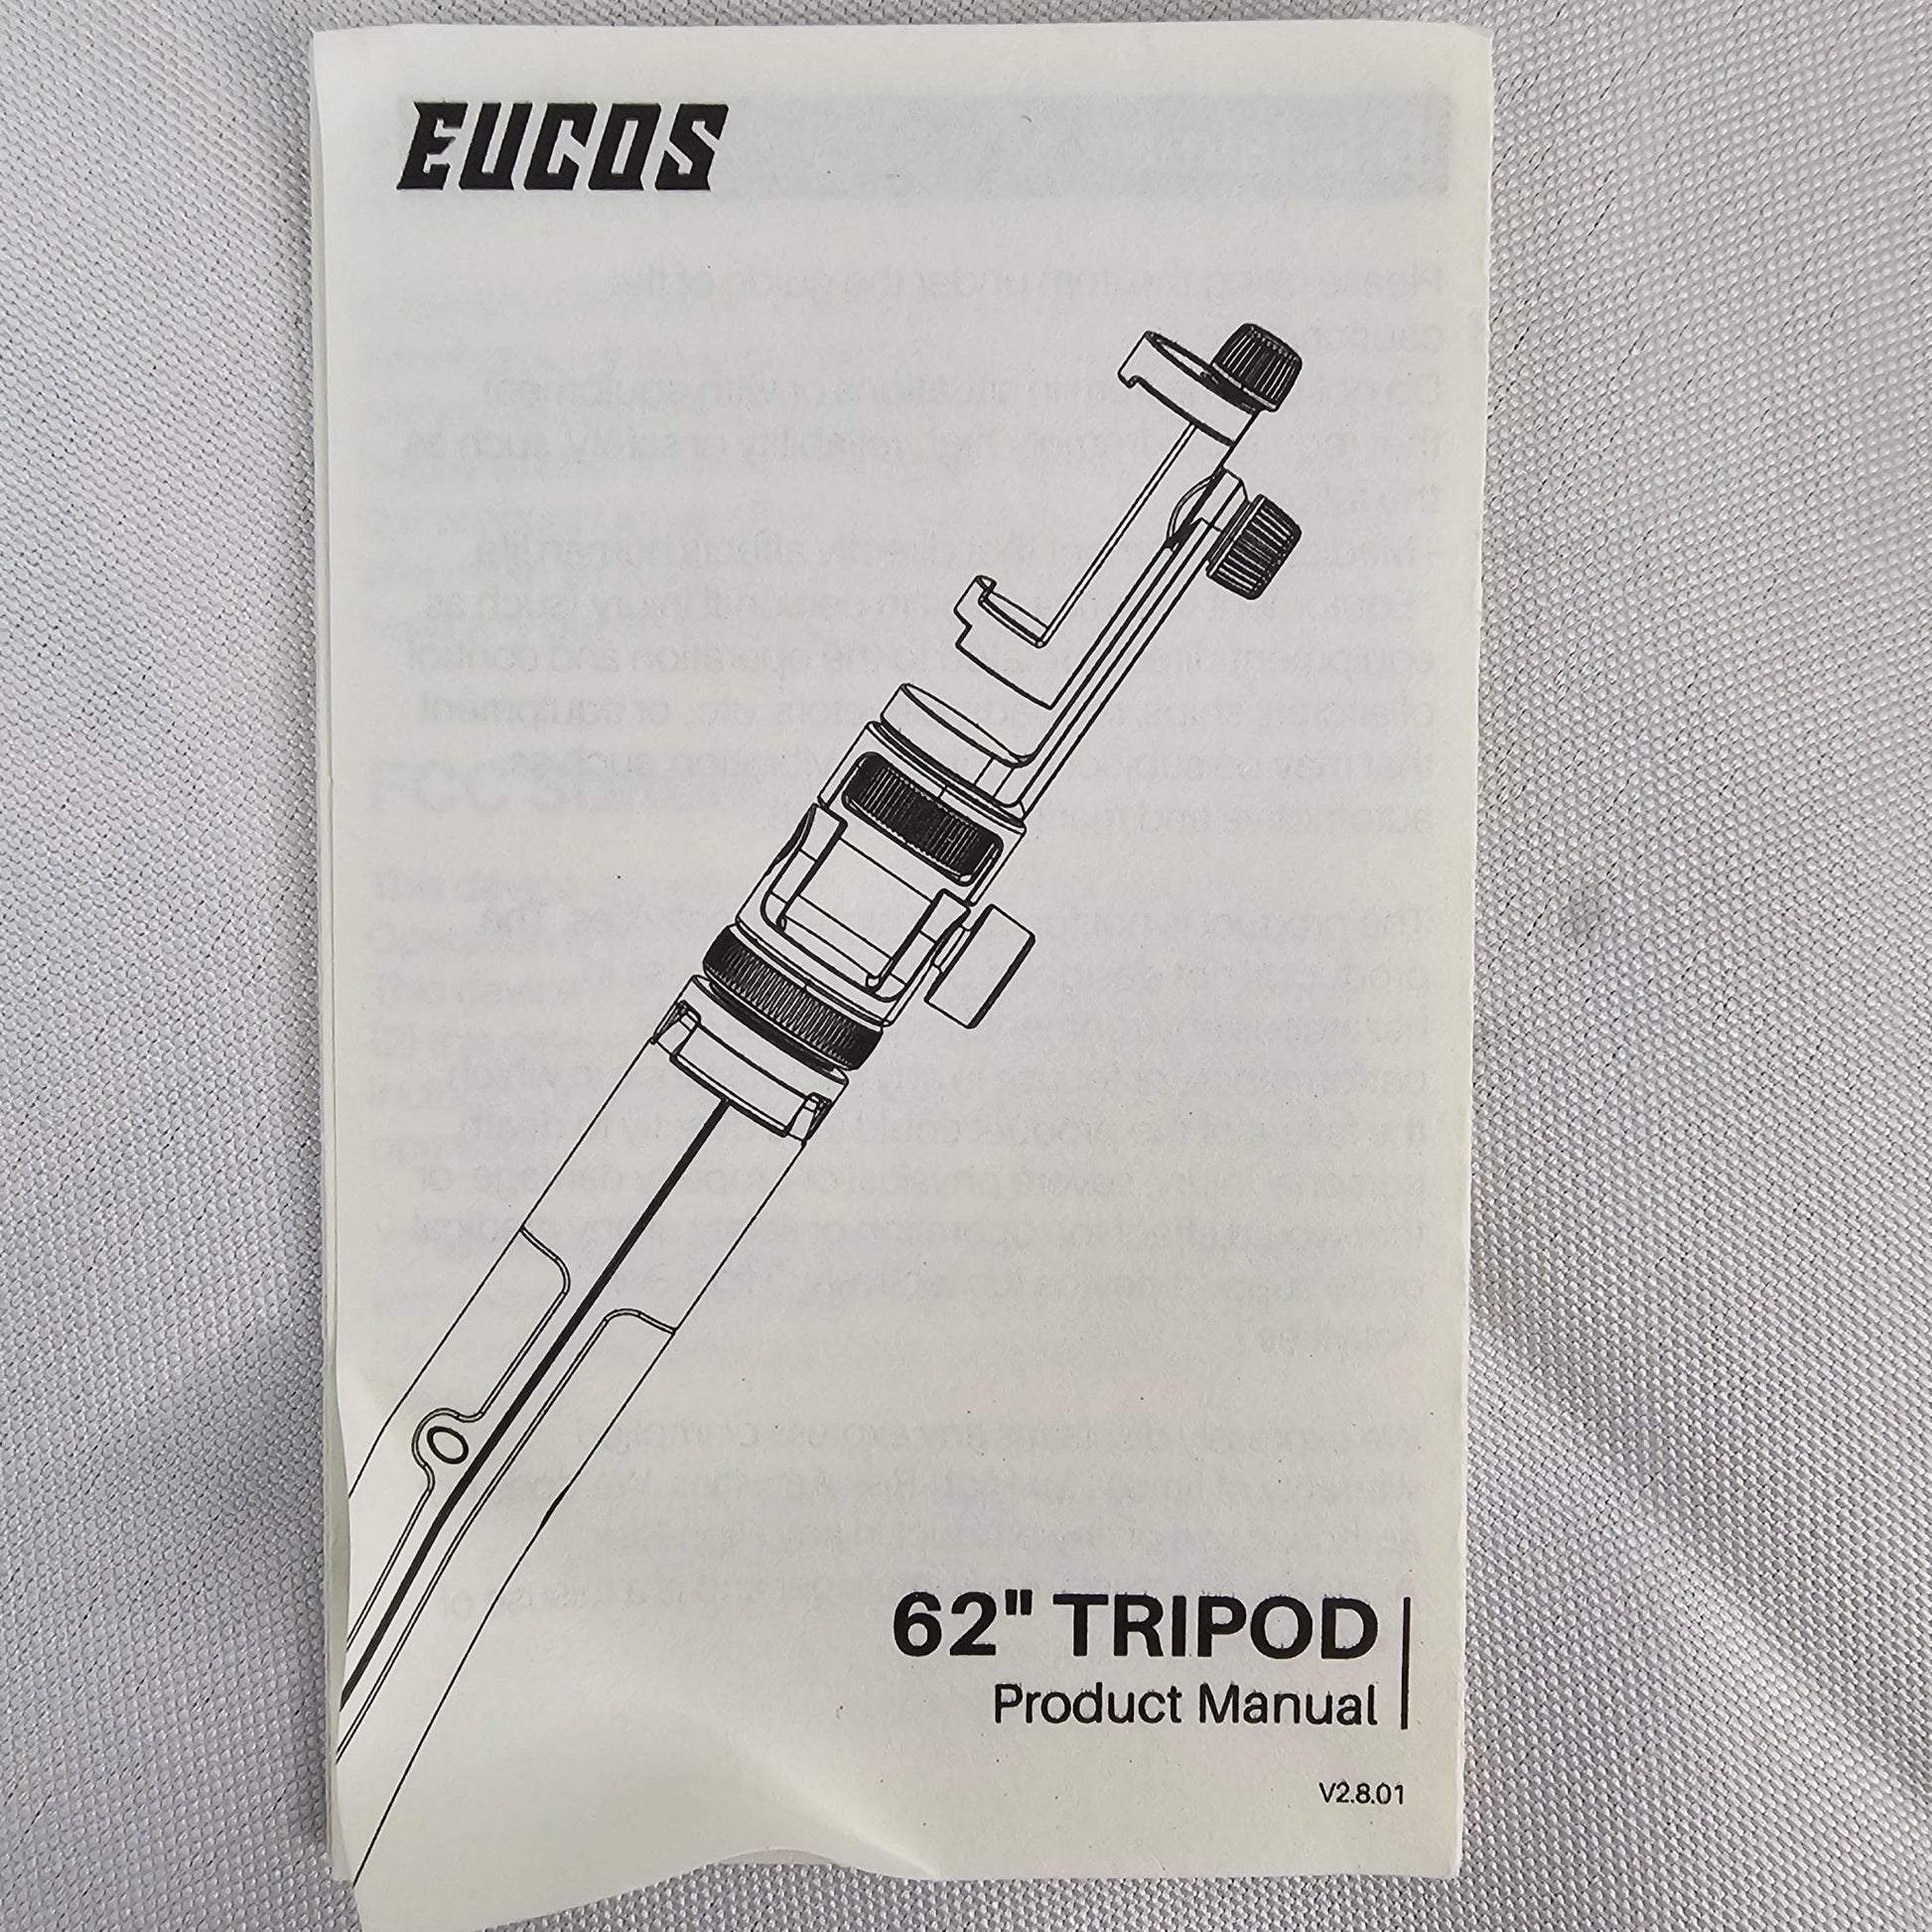 Tripod Stand 62 Inch Eucos - DQ Distribution